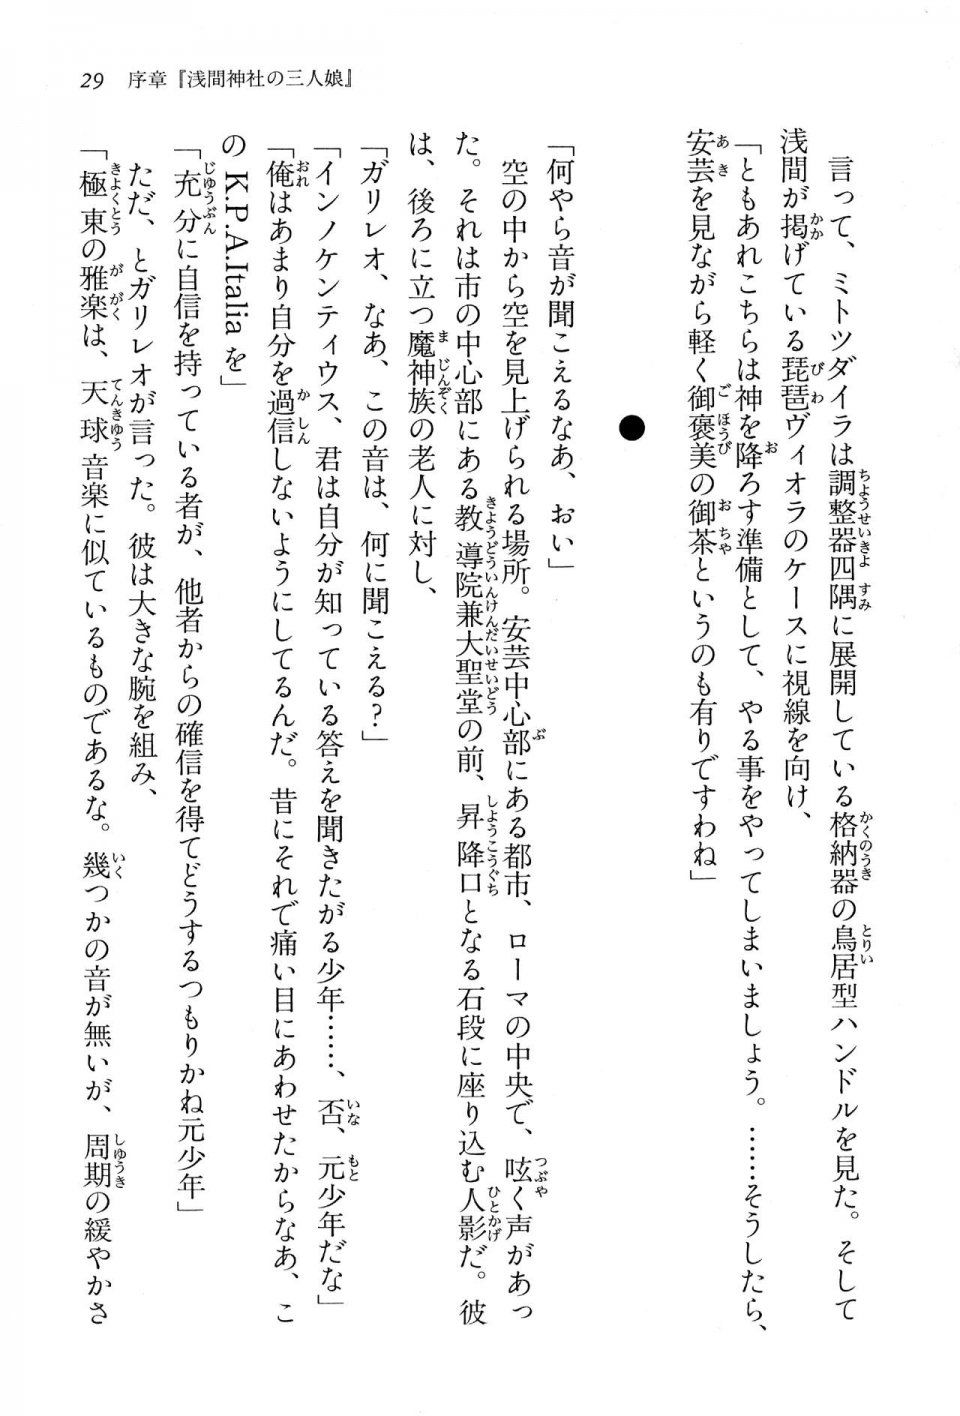 Kyoukai Senjou no Horizon BD Special Mininovel Vol 1(1A) - Photo #33